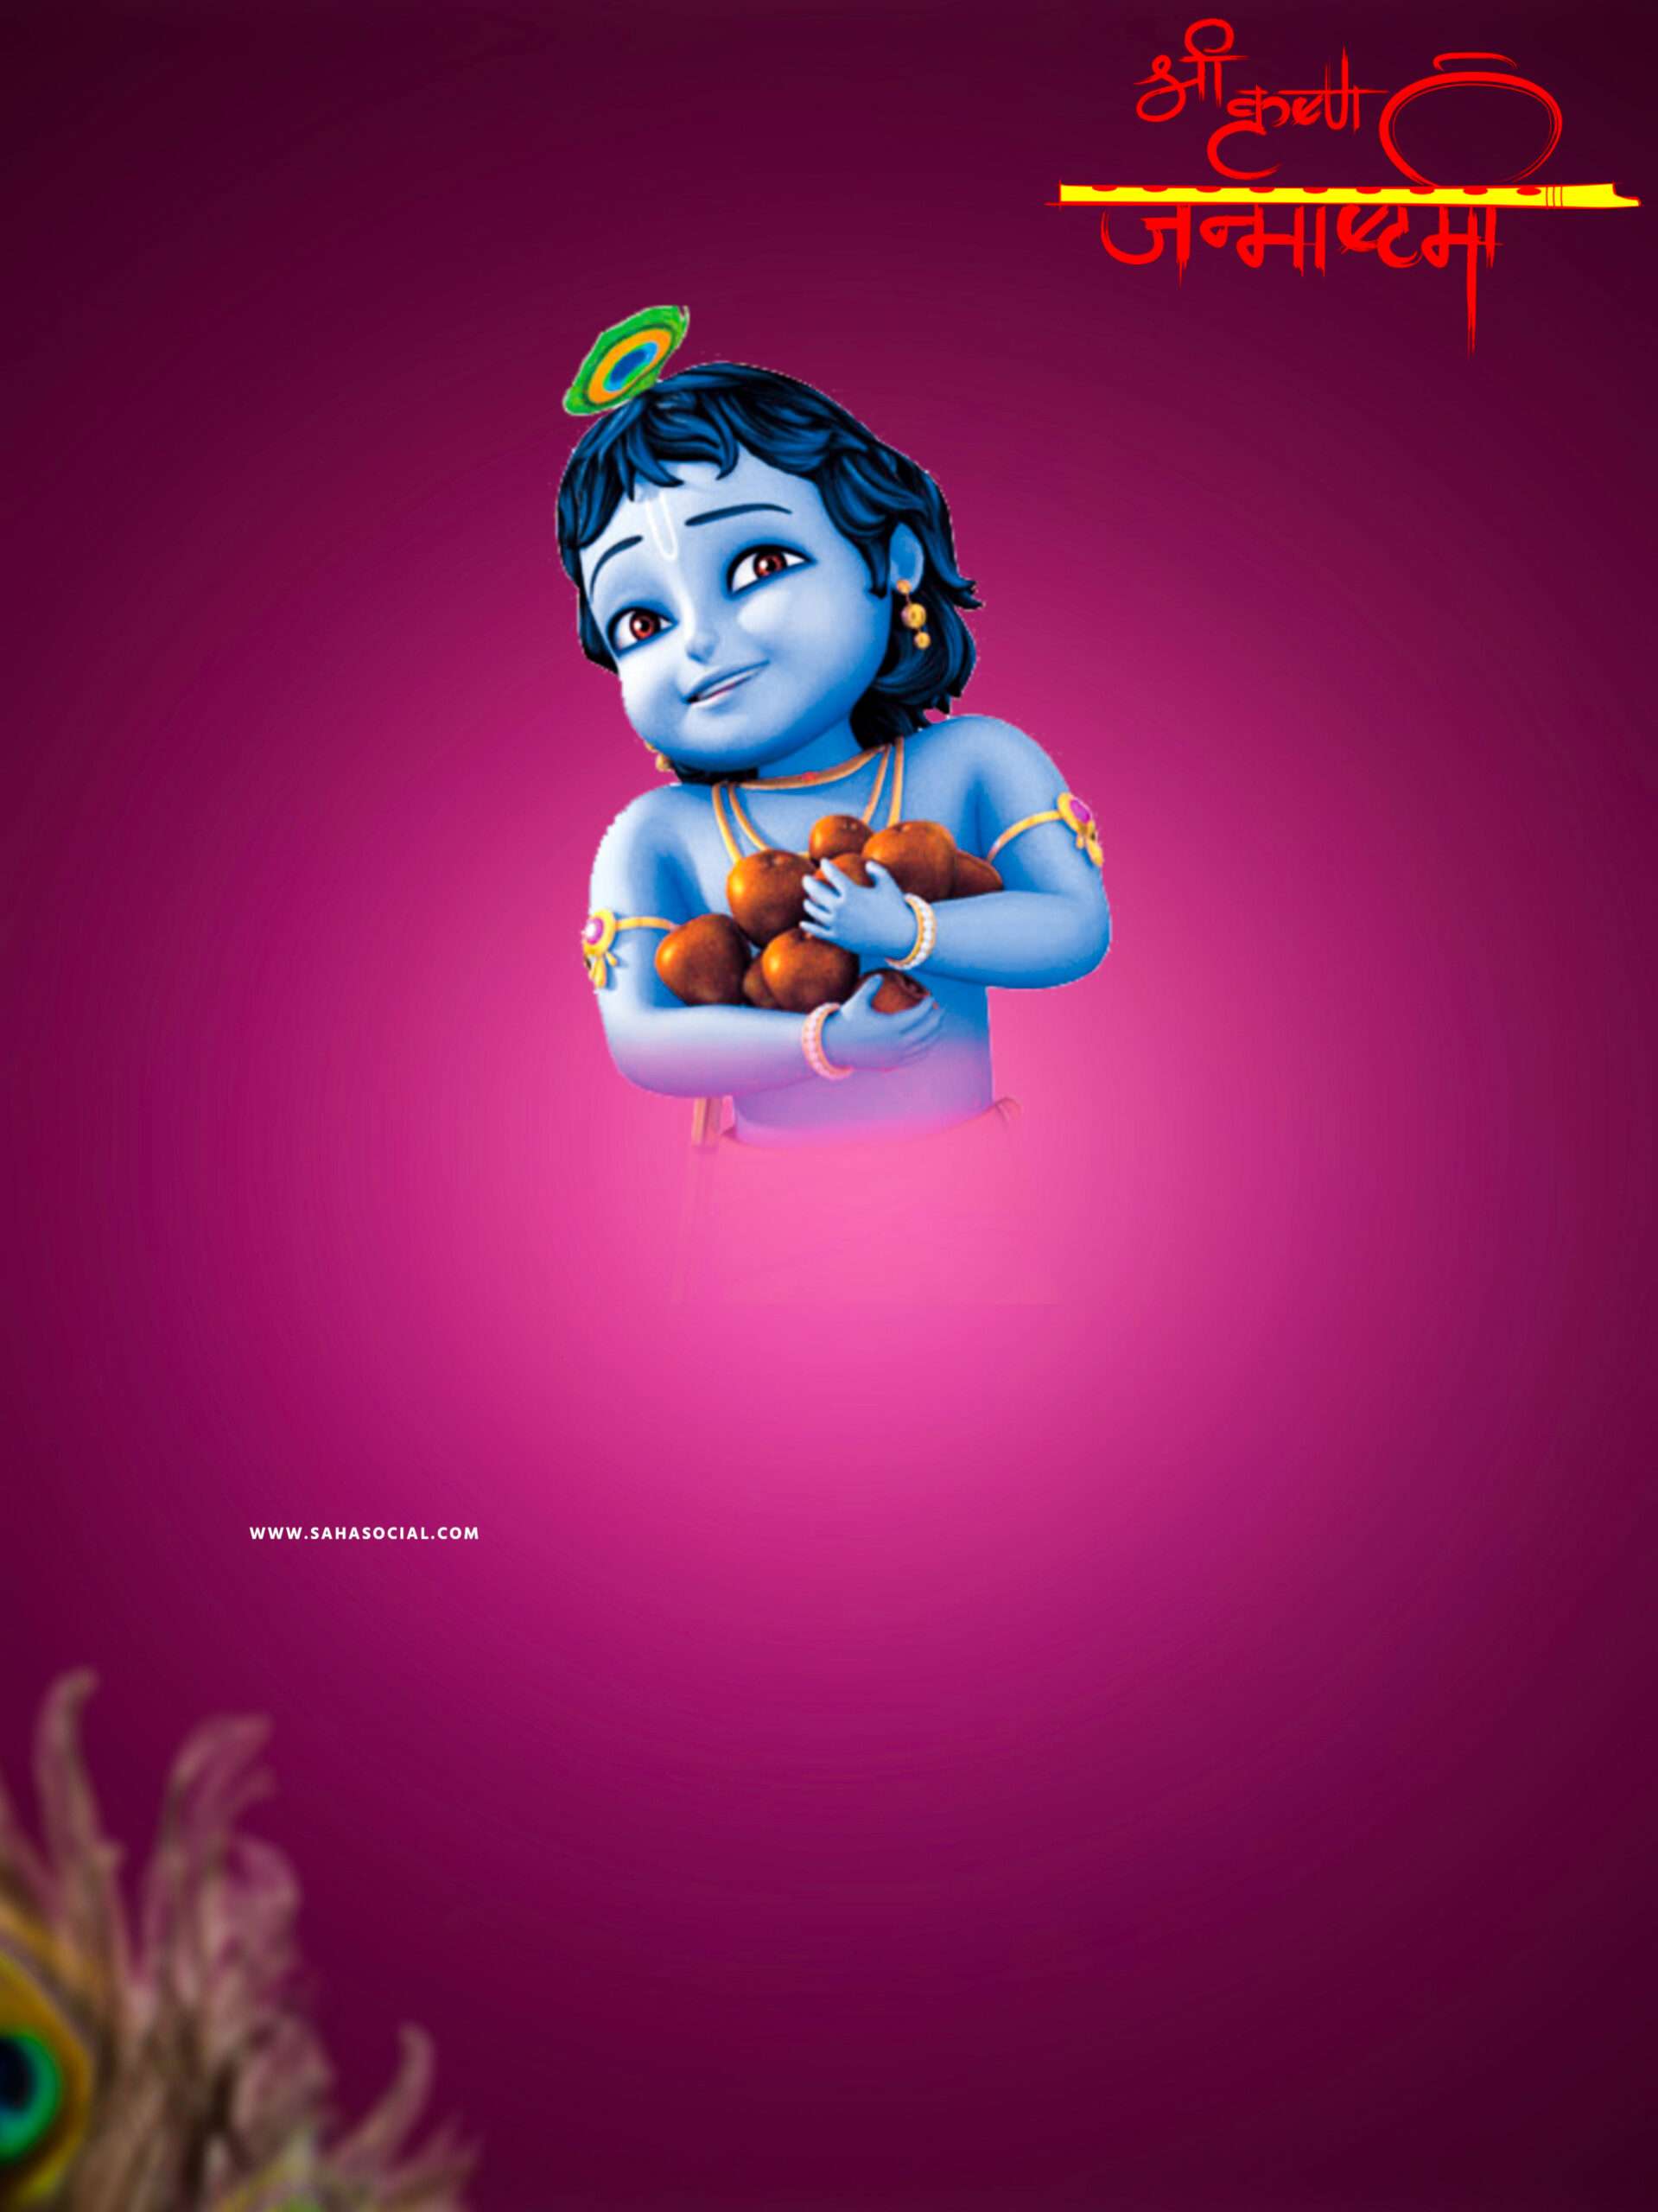 Krishna Photo Editing background and wallpaper hd